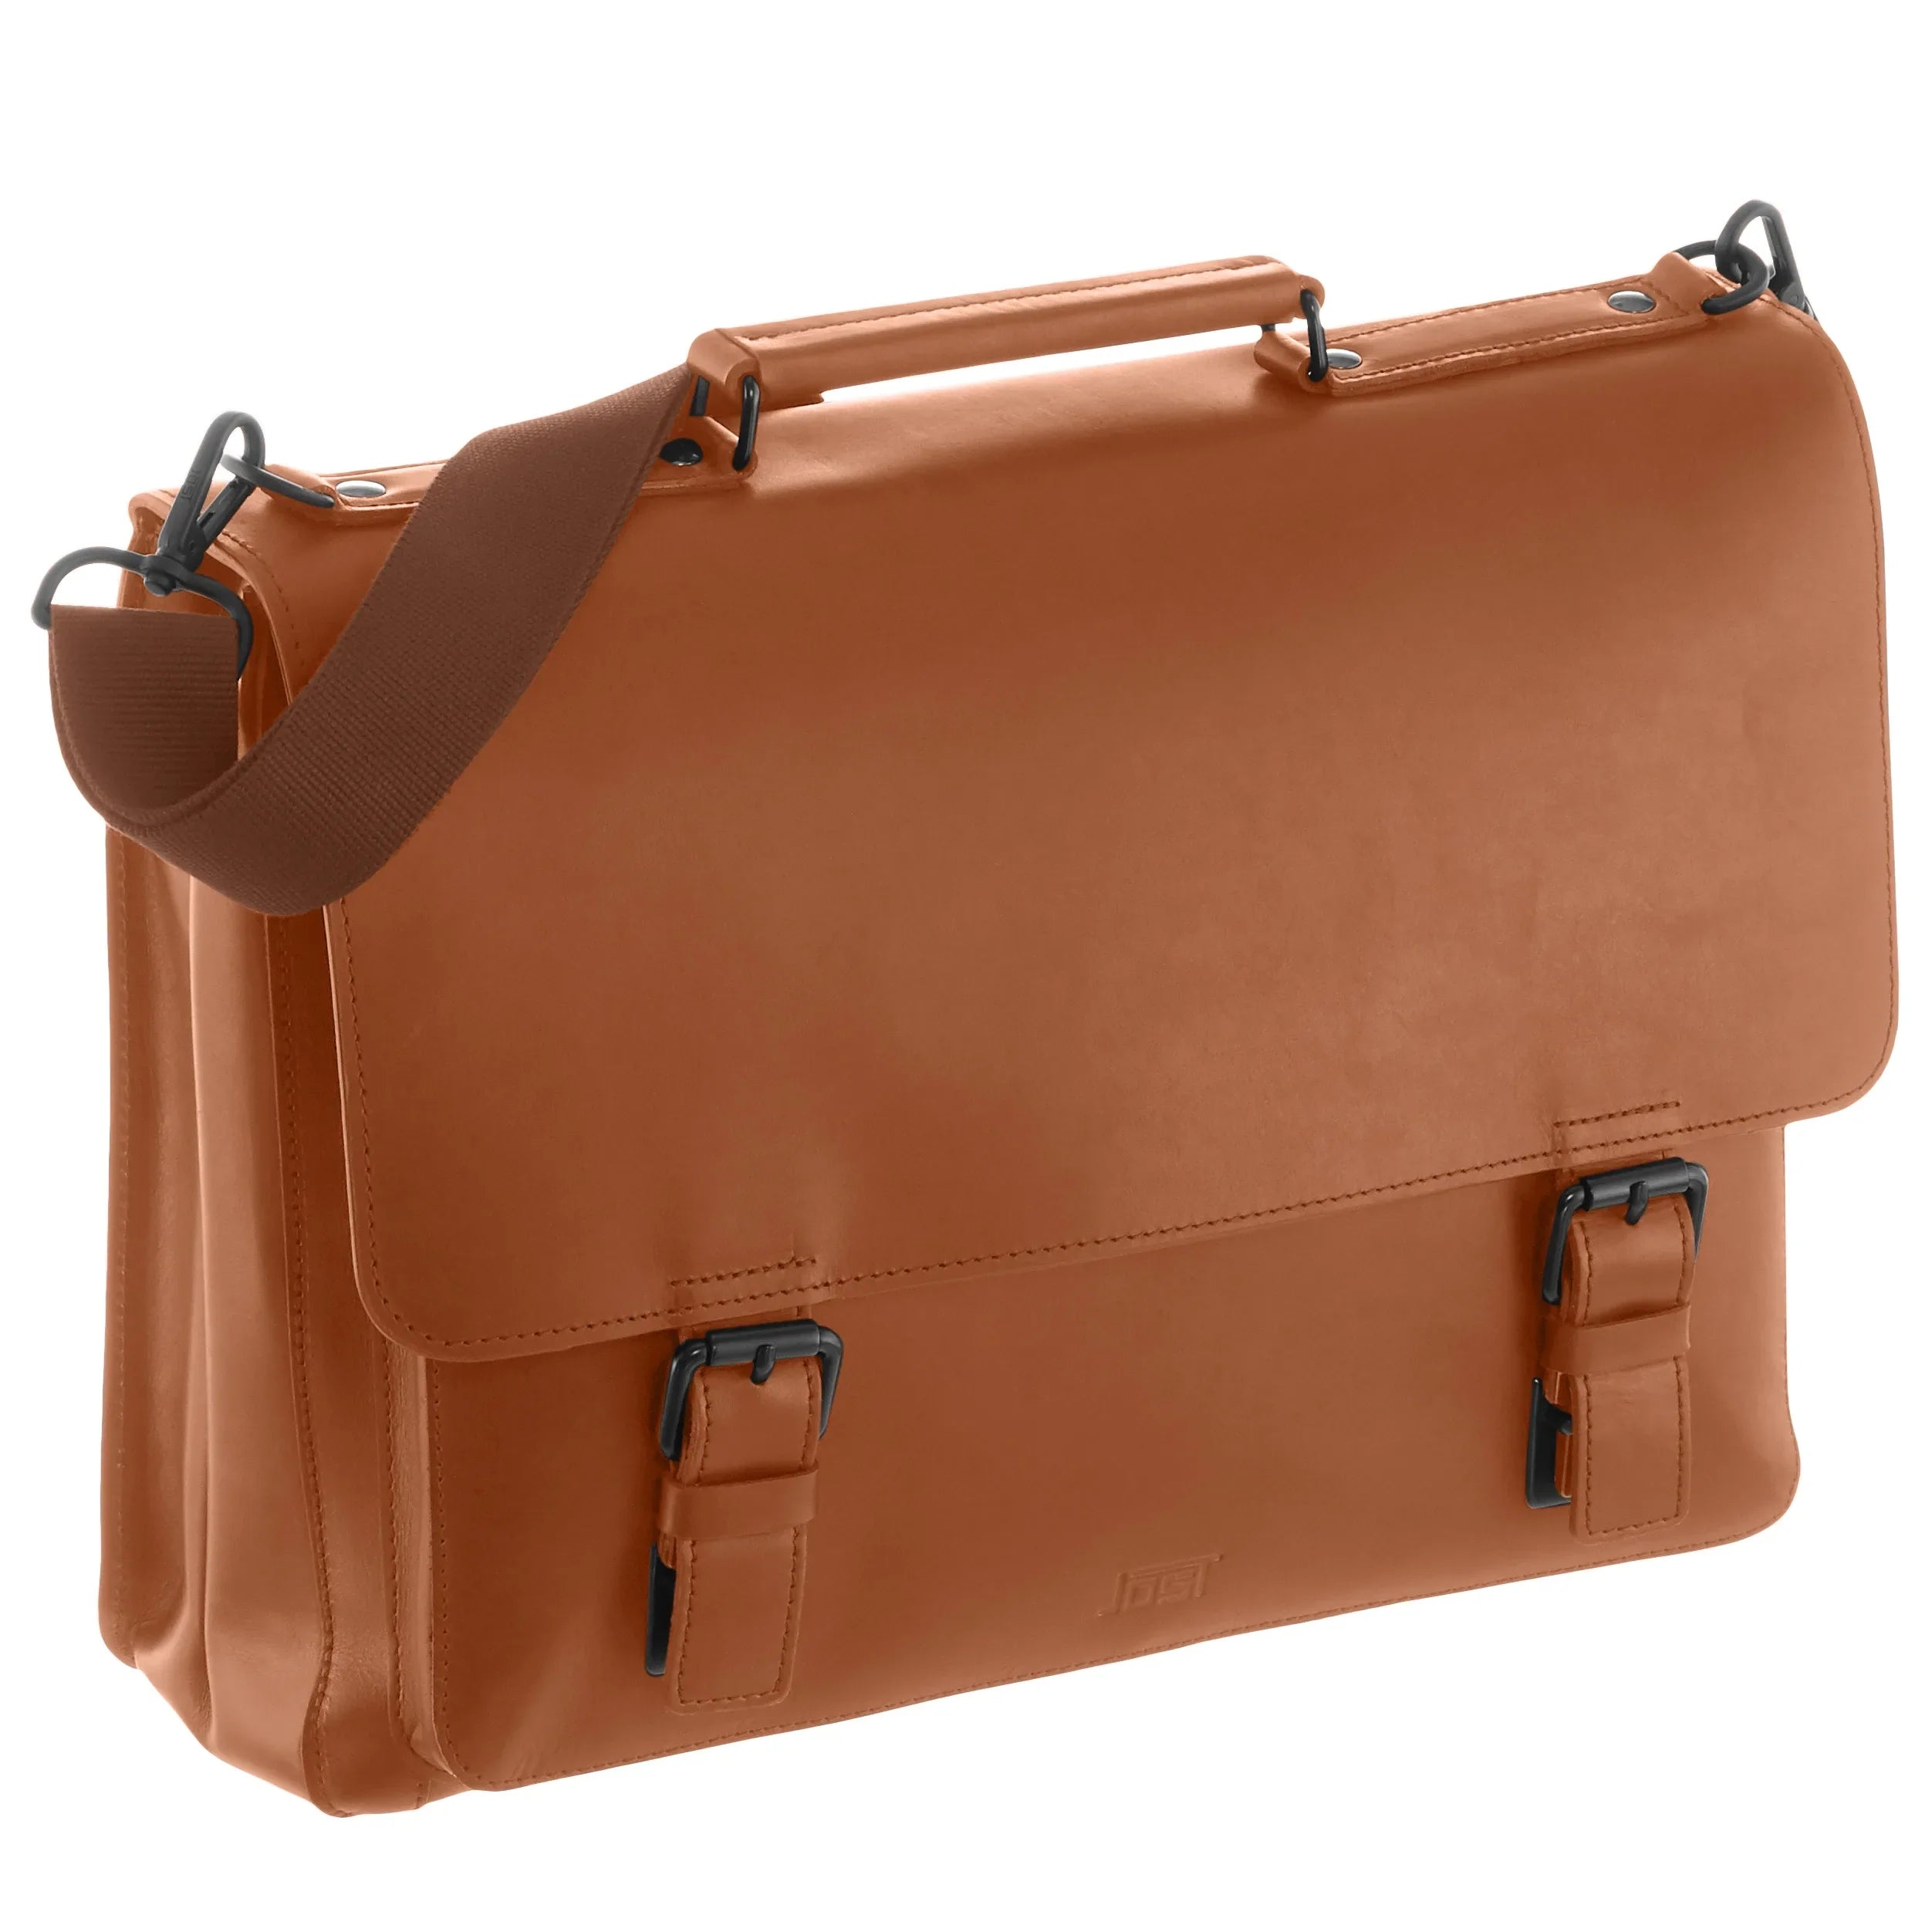 Jost Futura laptop briefcase 40 cm - cognac